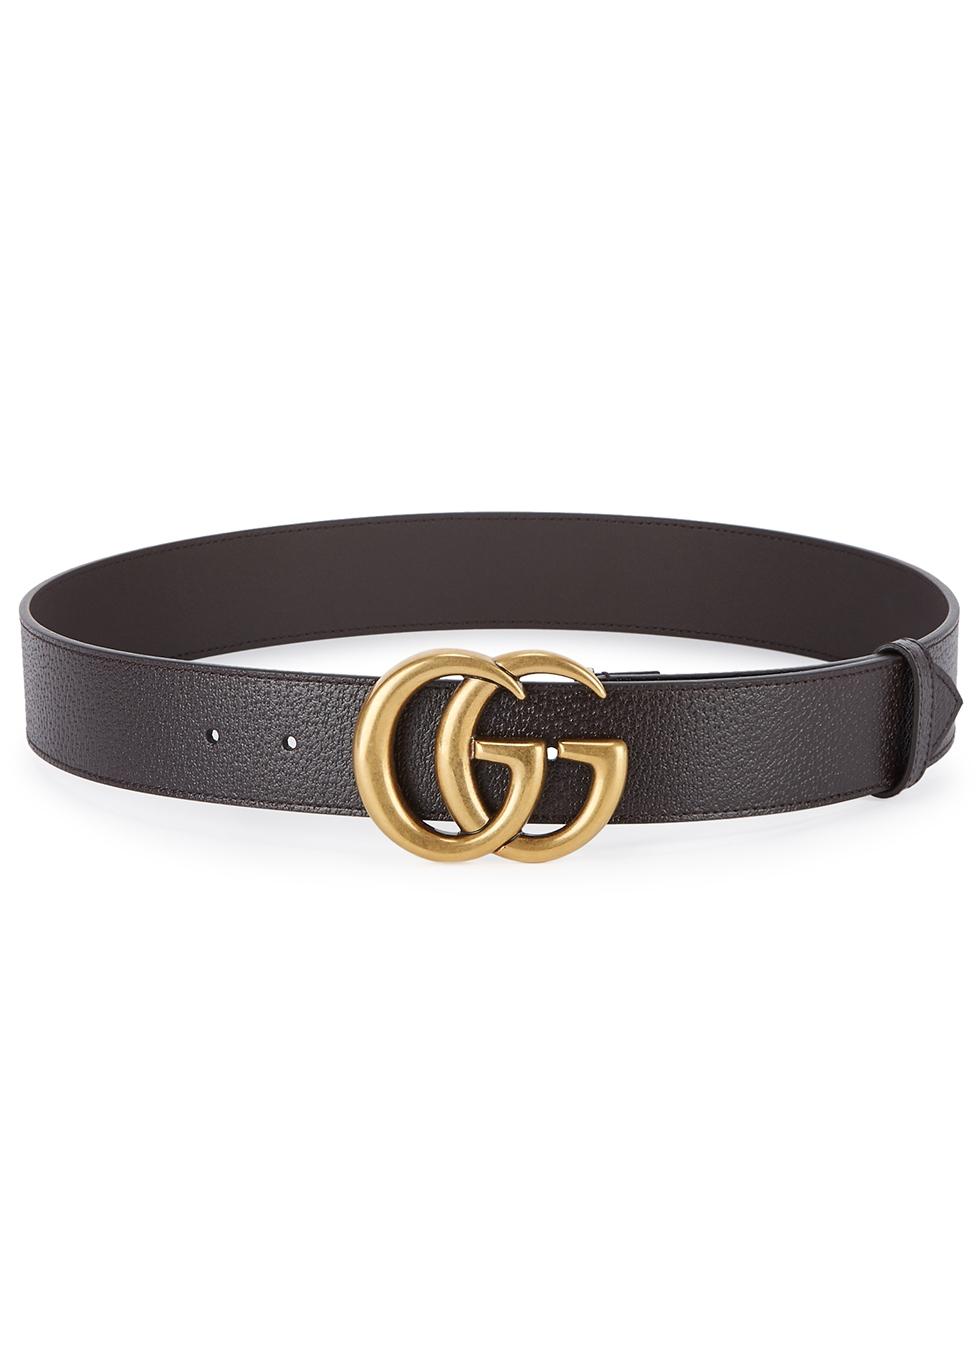 black gg gucci belt